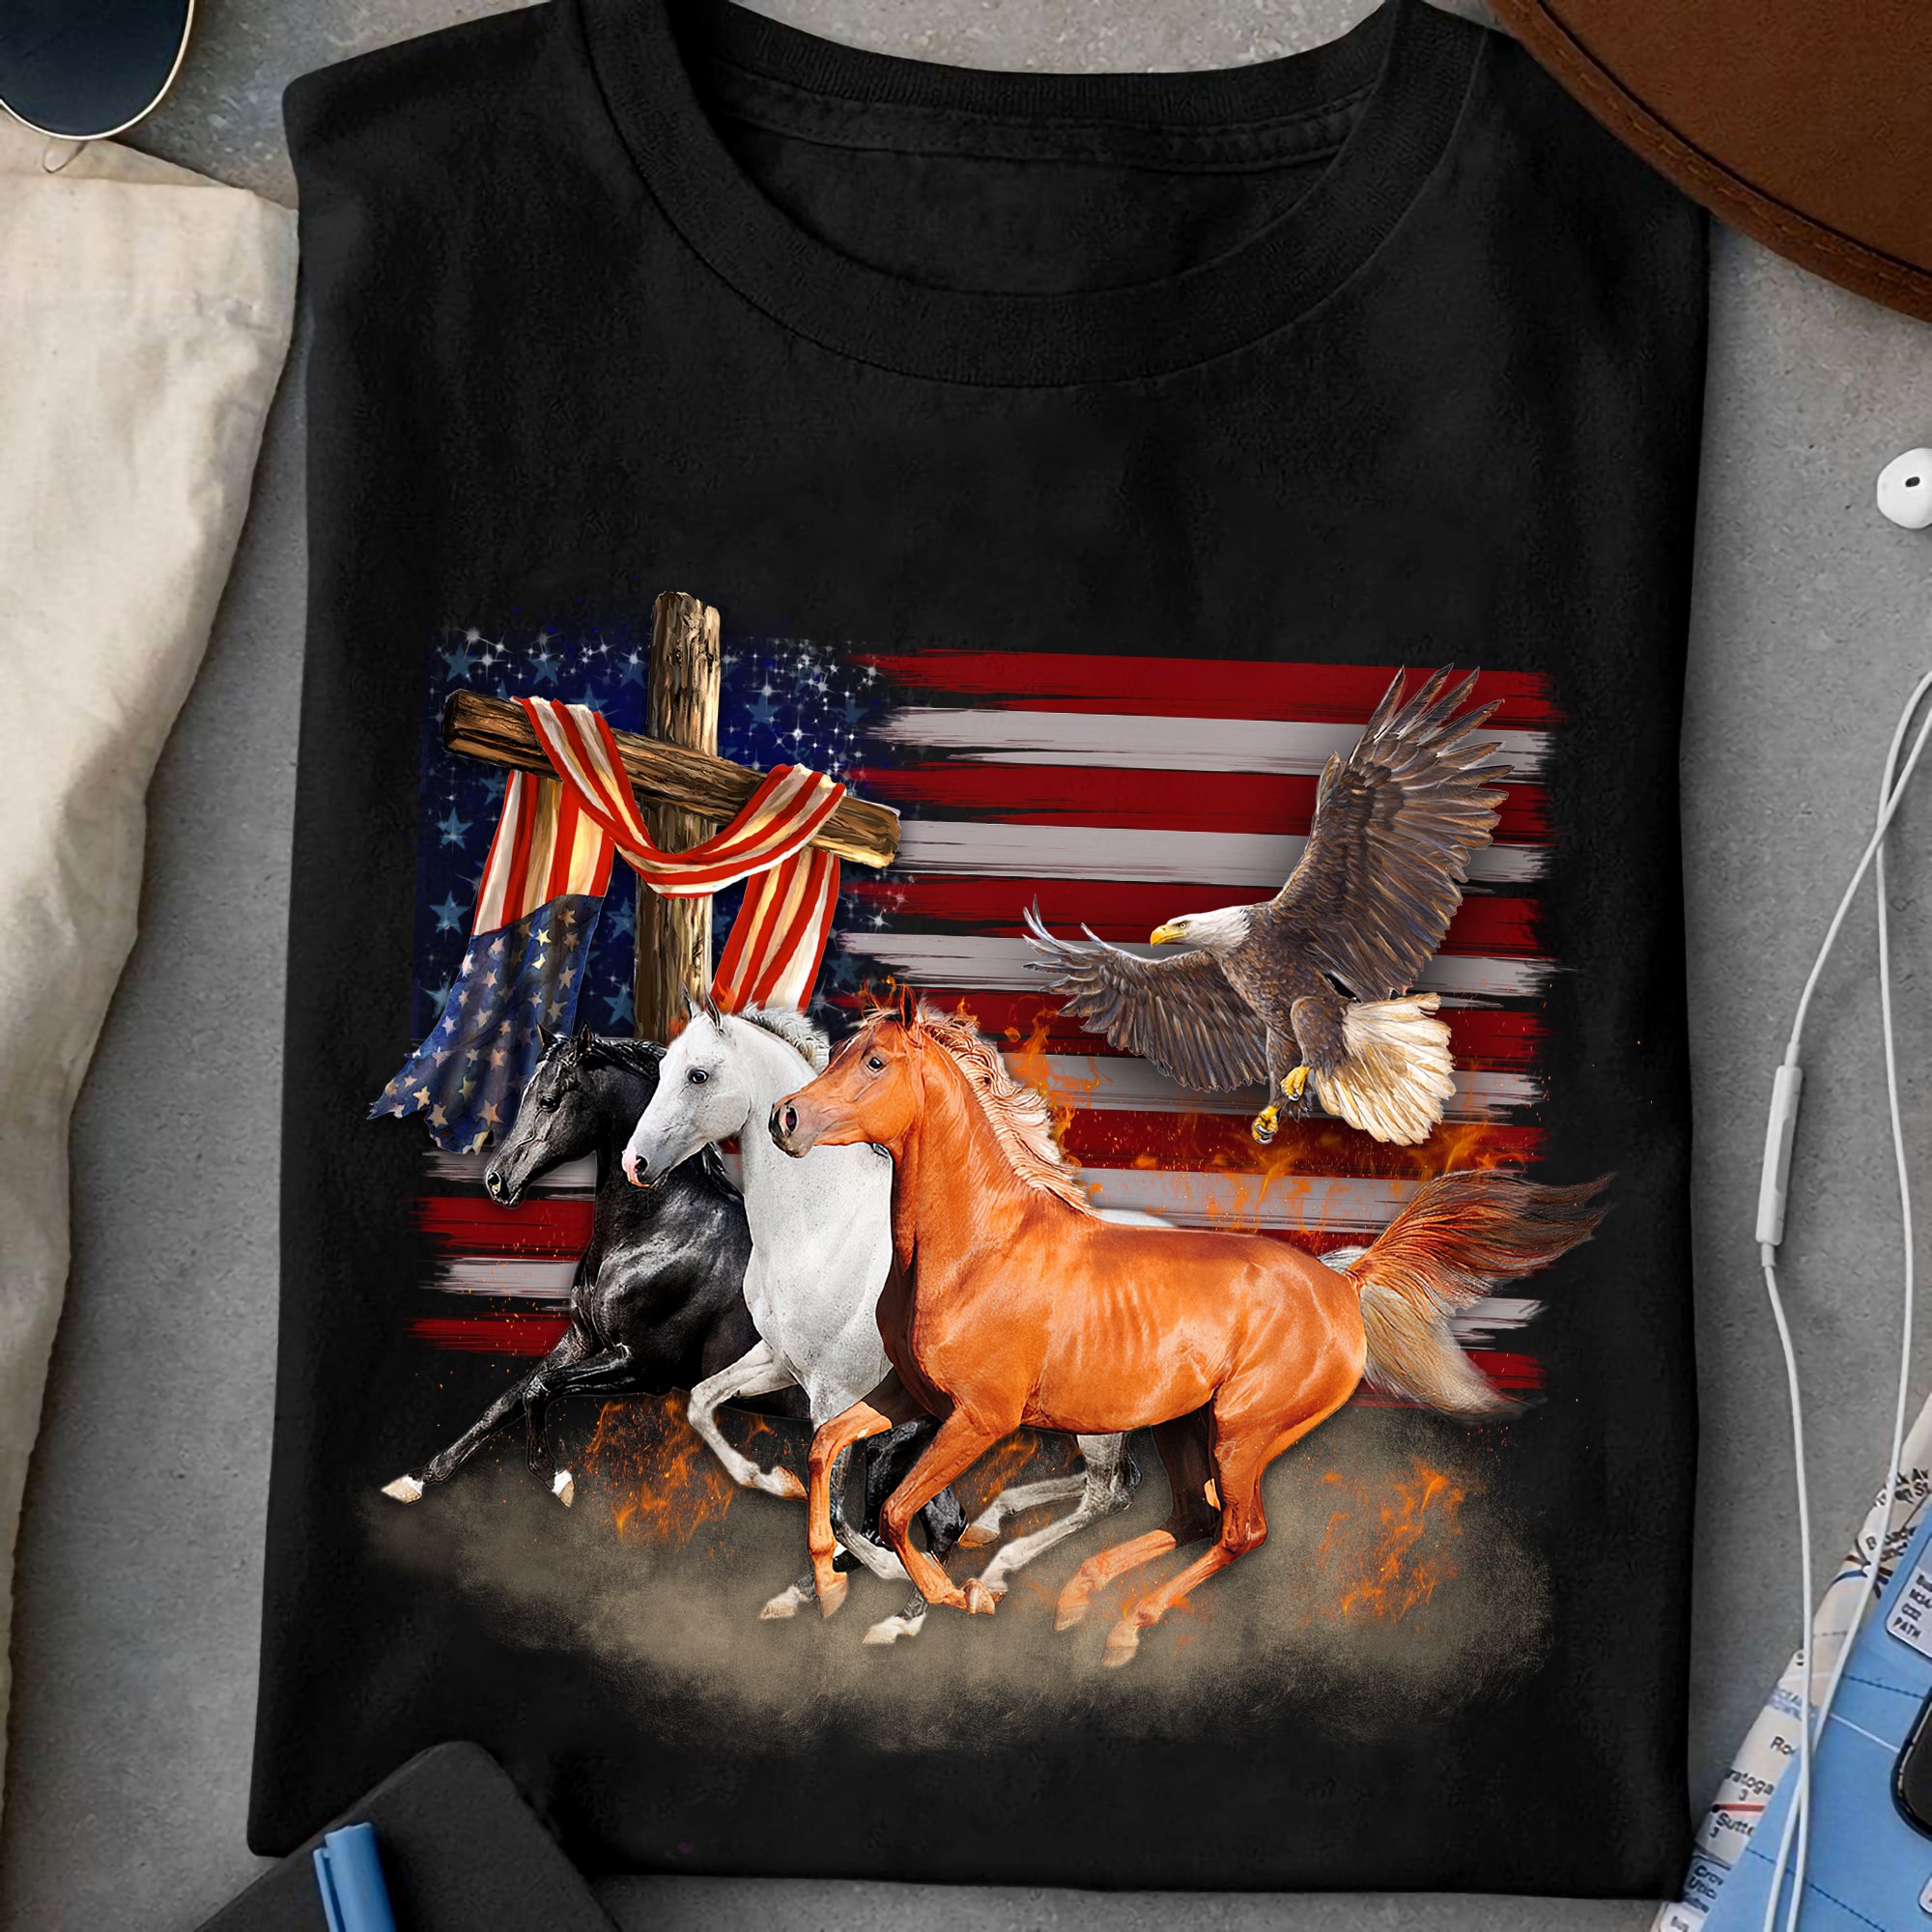 Horse and god's cross - America flag